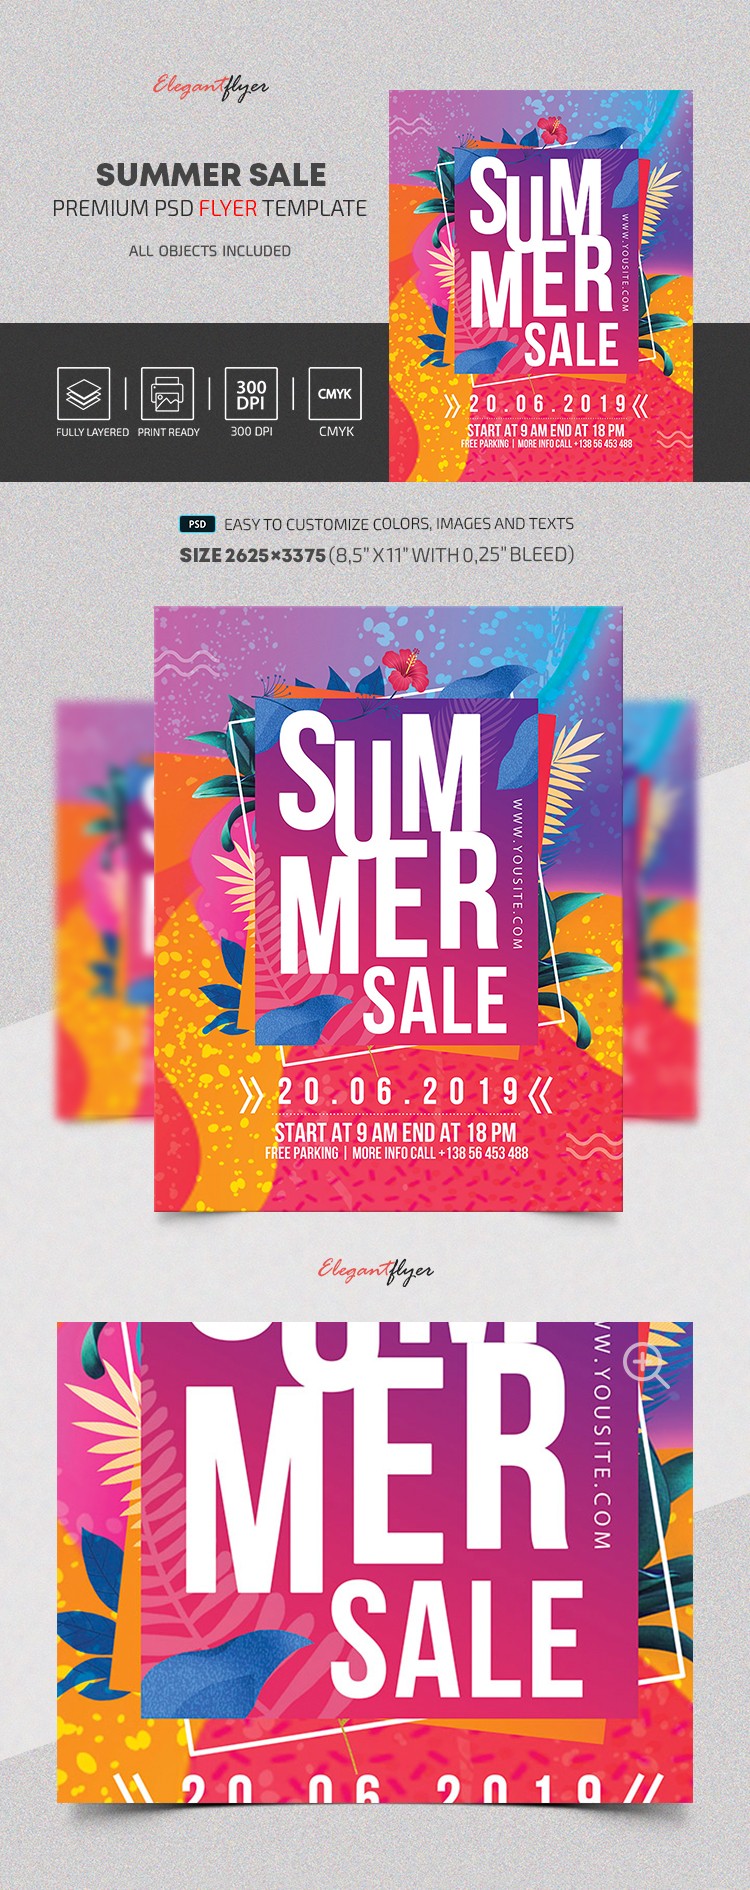 Summer Sale by ElegantFlyer